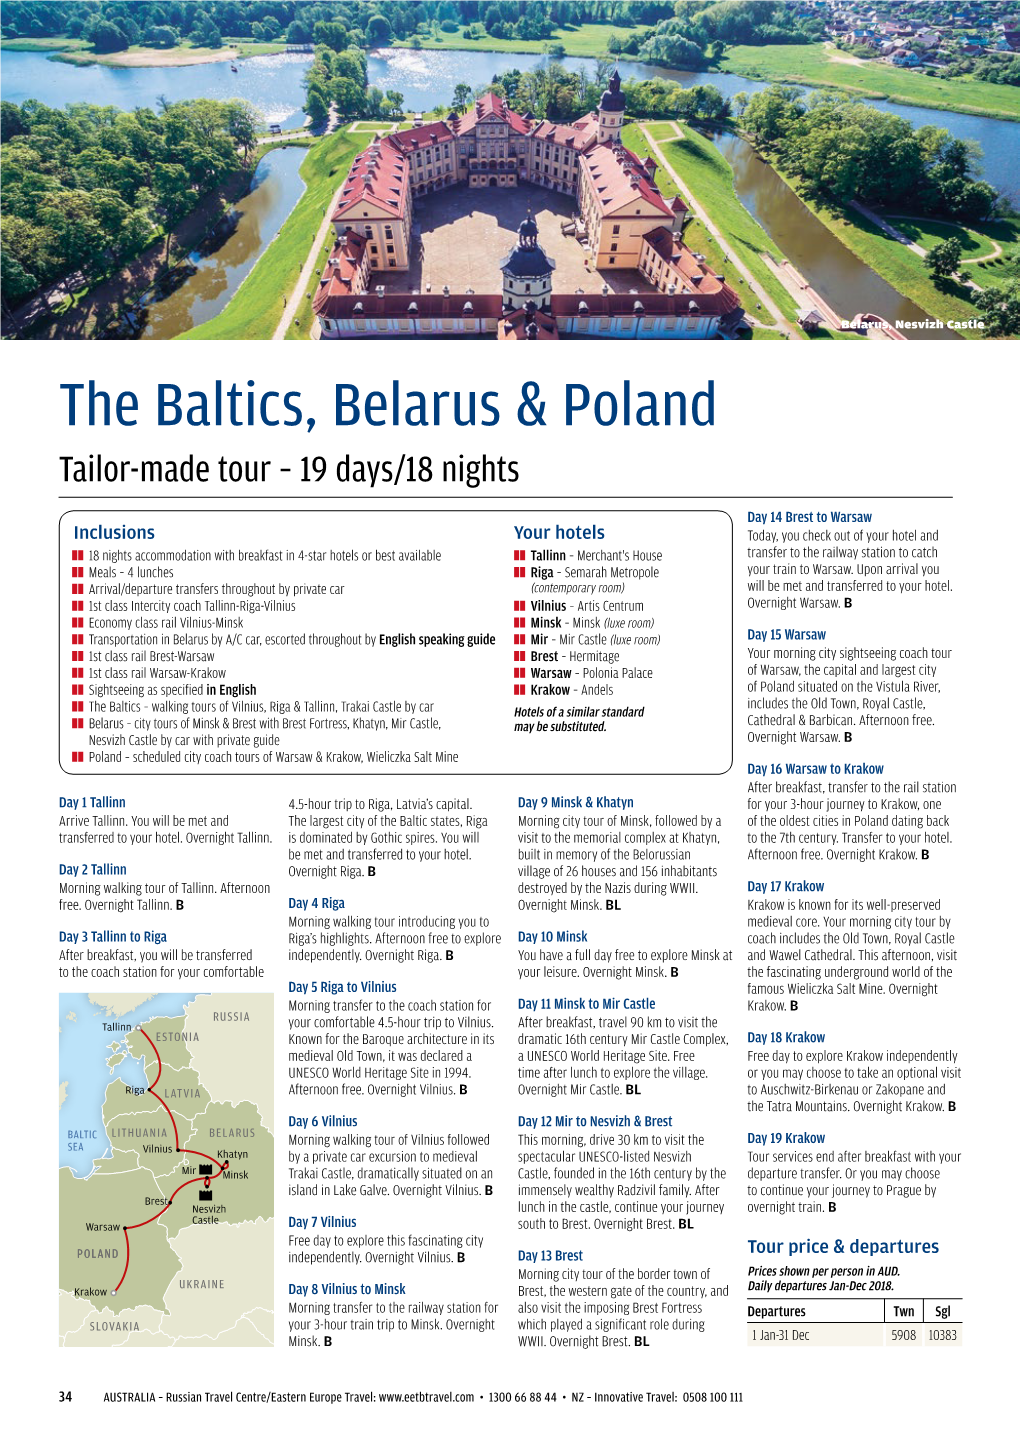 The Baltics, Belarus & Poland